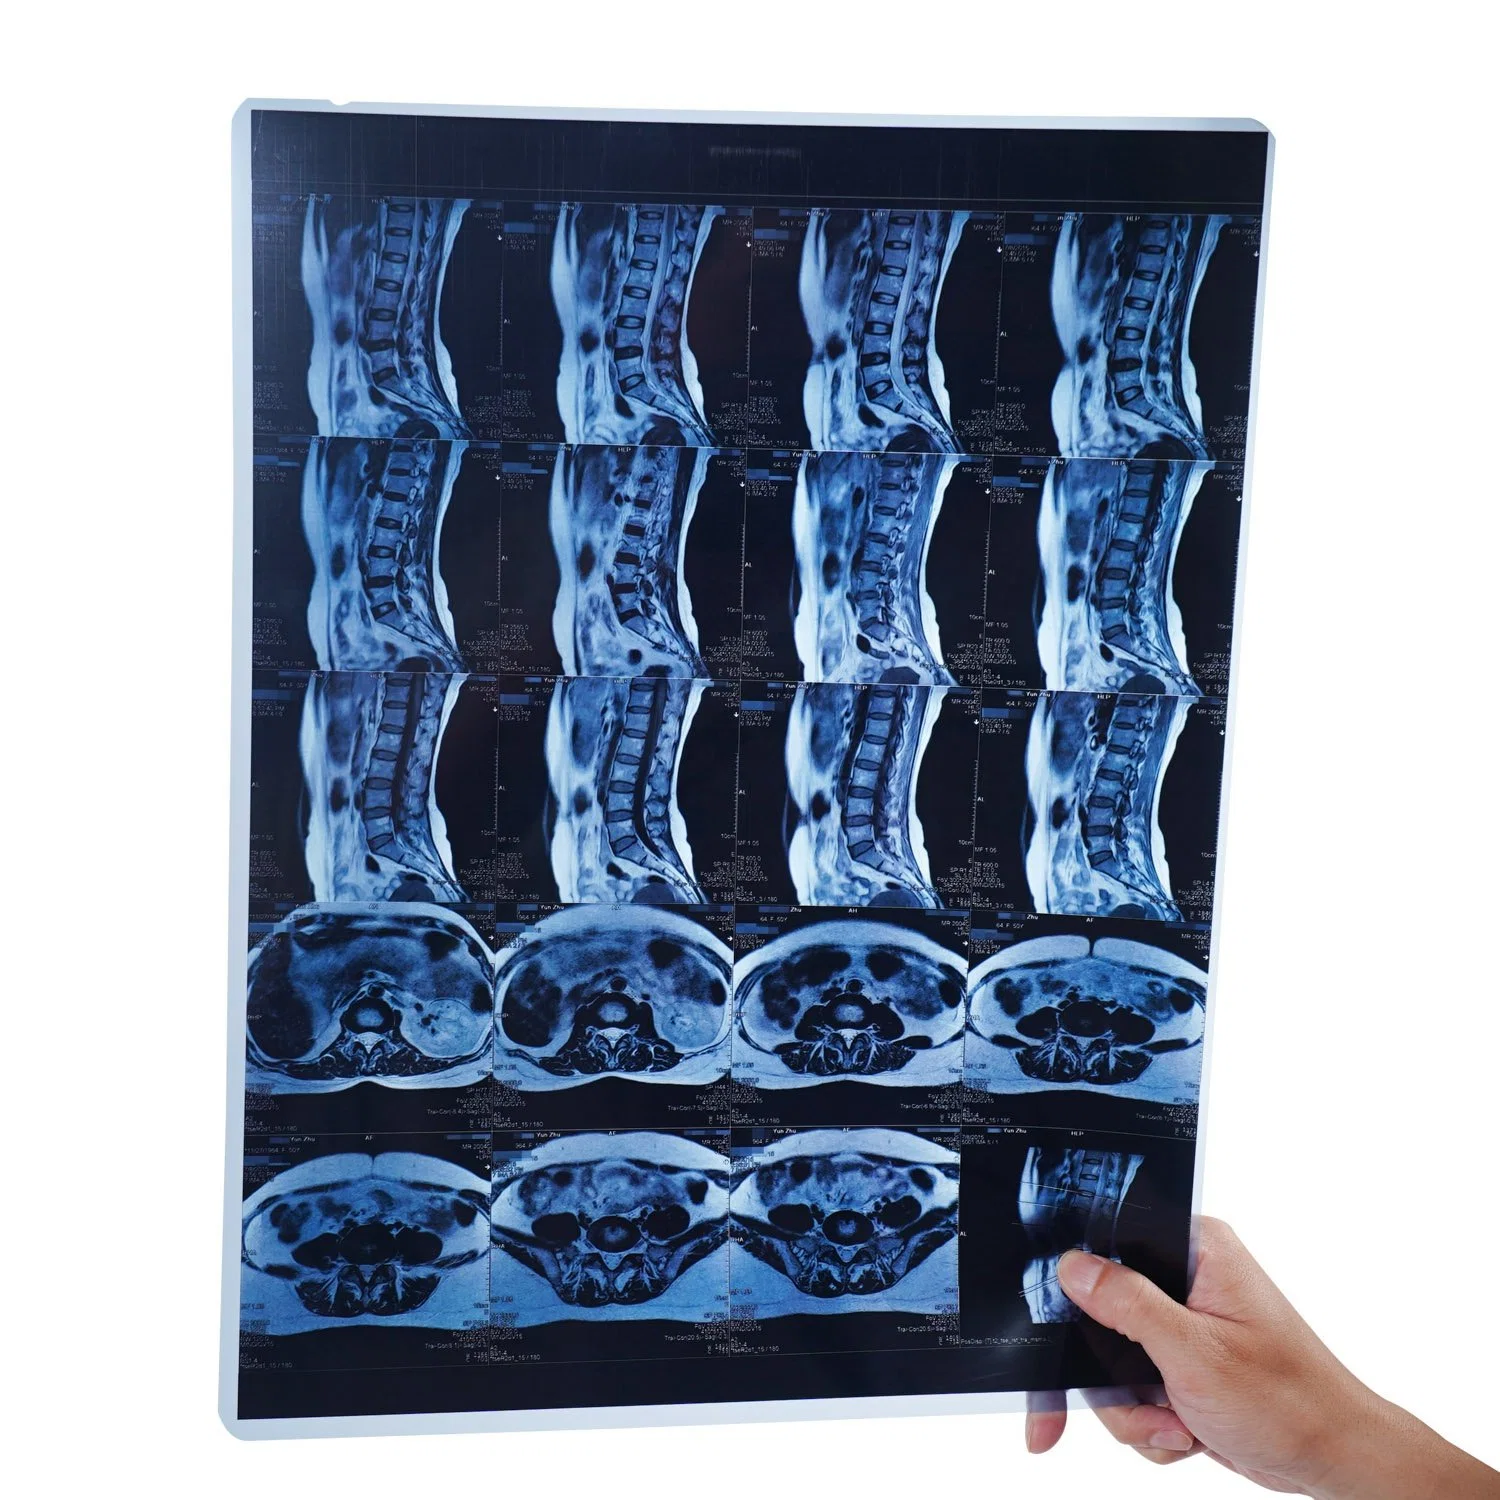 FUJI Dry Medical X-ray Thermal Film